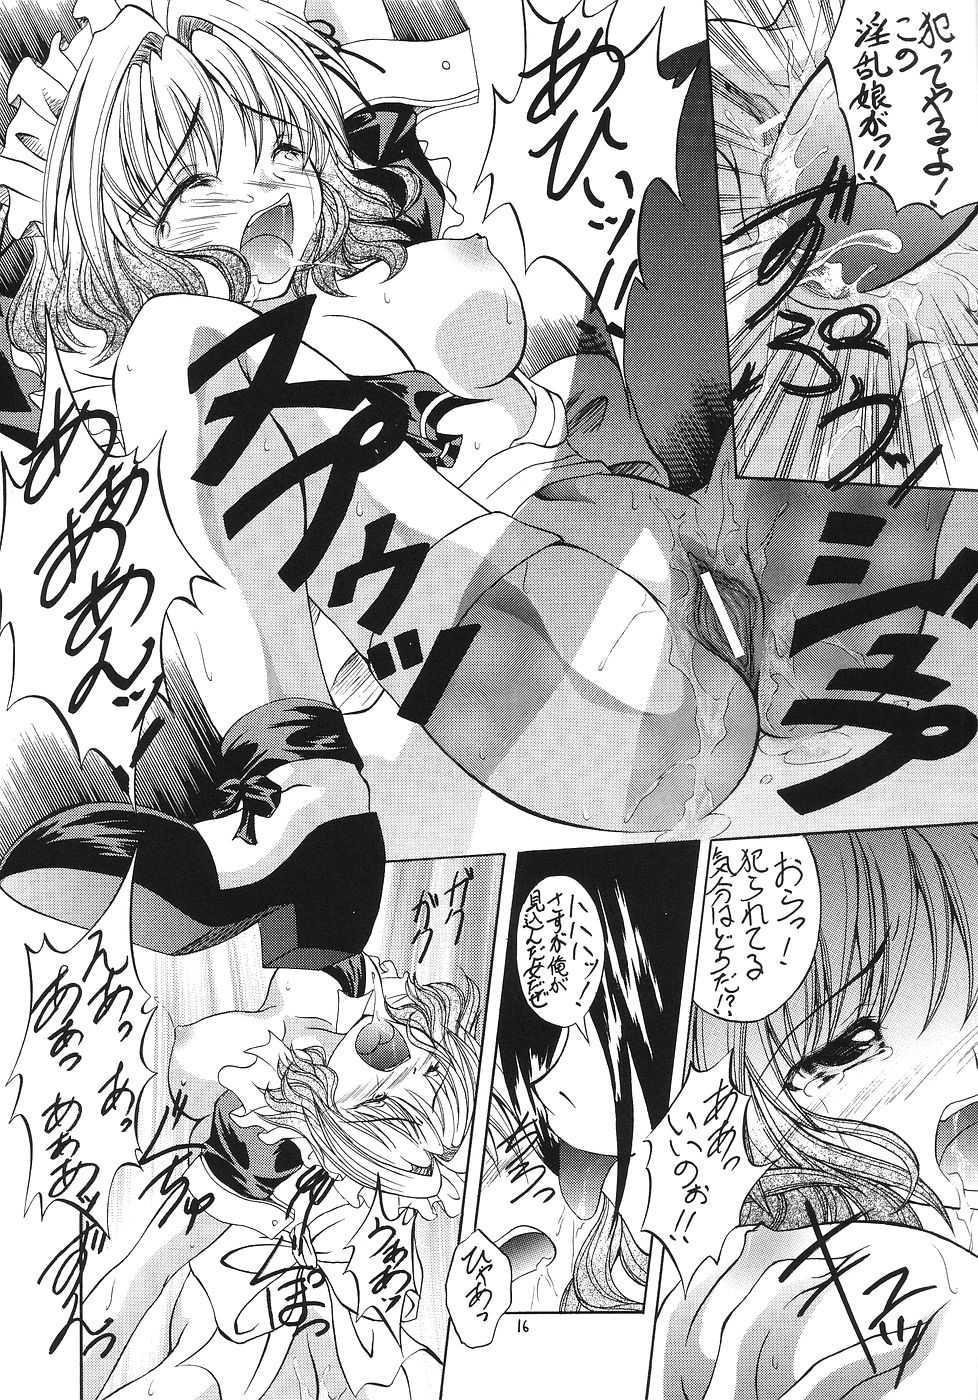 [RED RIBBON REVENGER] Kaze no Yousei Vol. 2 (Elemental Gerad) 